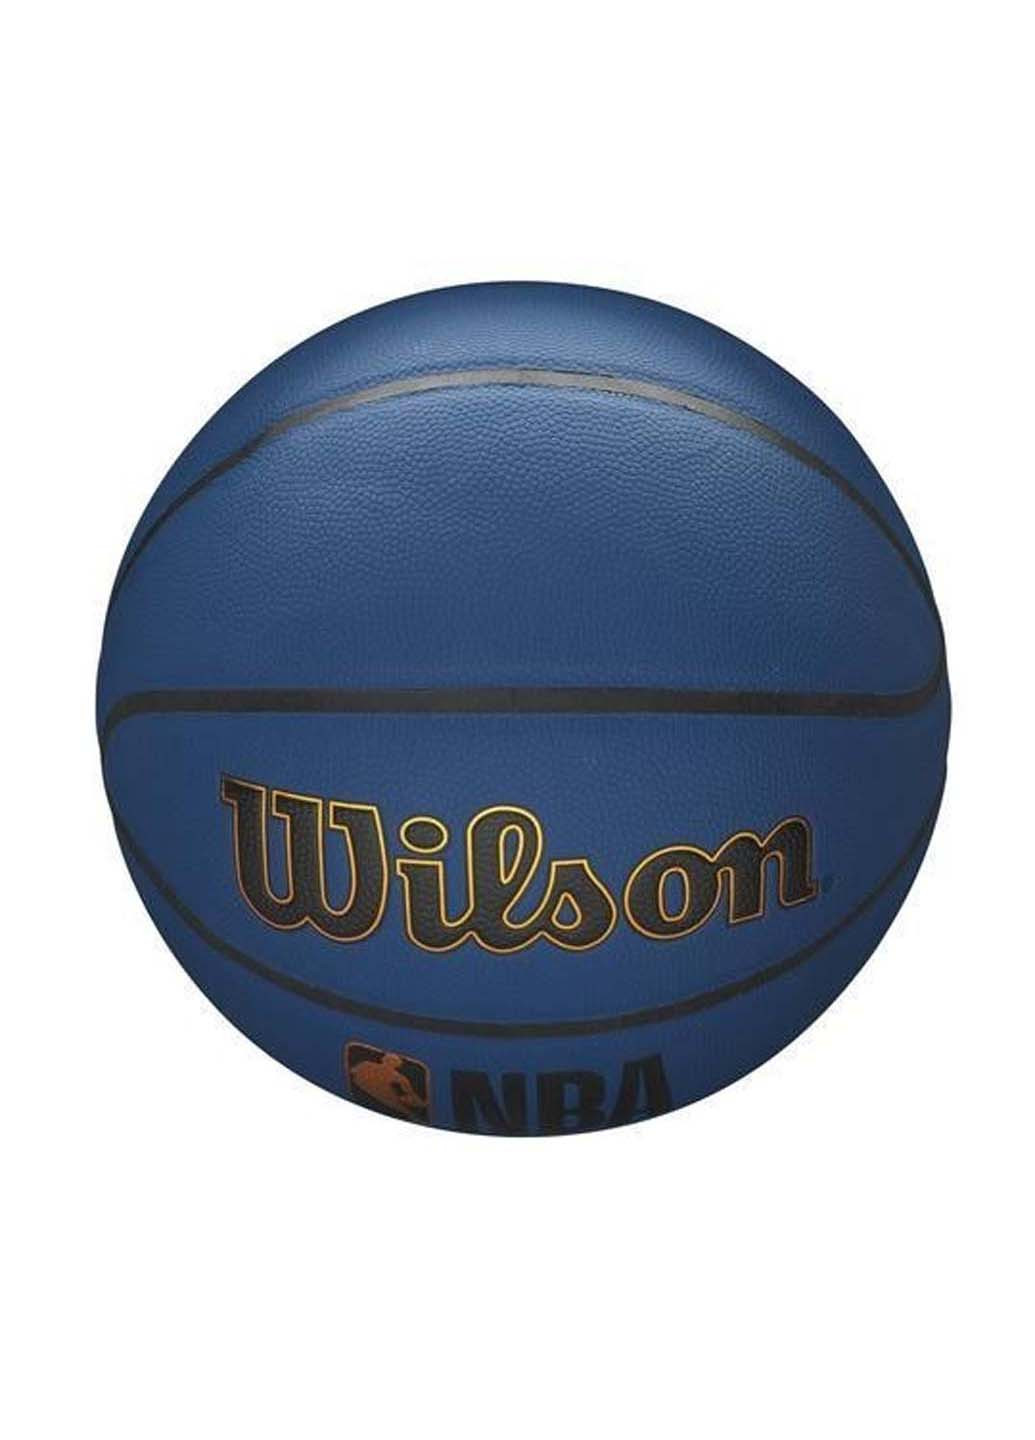 Мяч баскетбольный NBA FORGE PLUS BSKT DEEP SZ 7 Wilson (257606872)